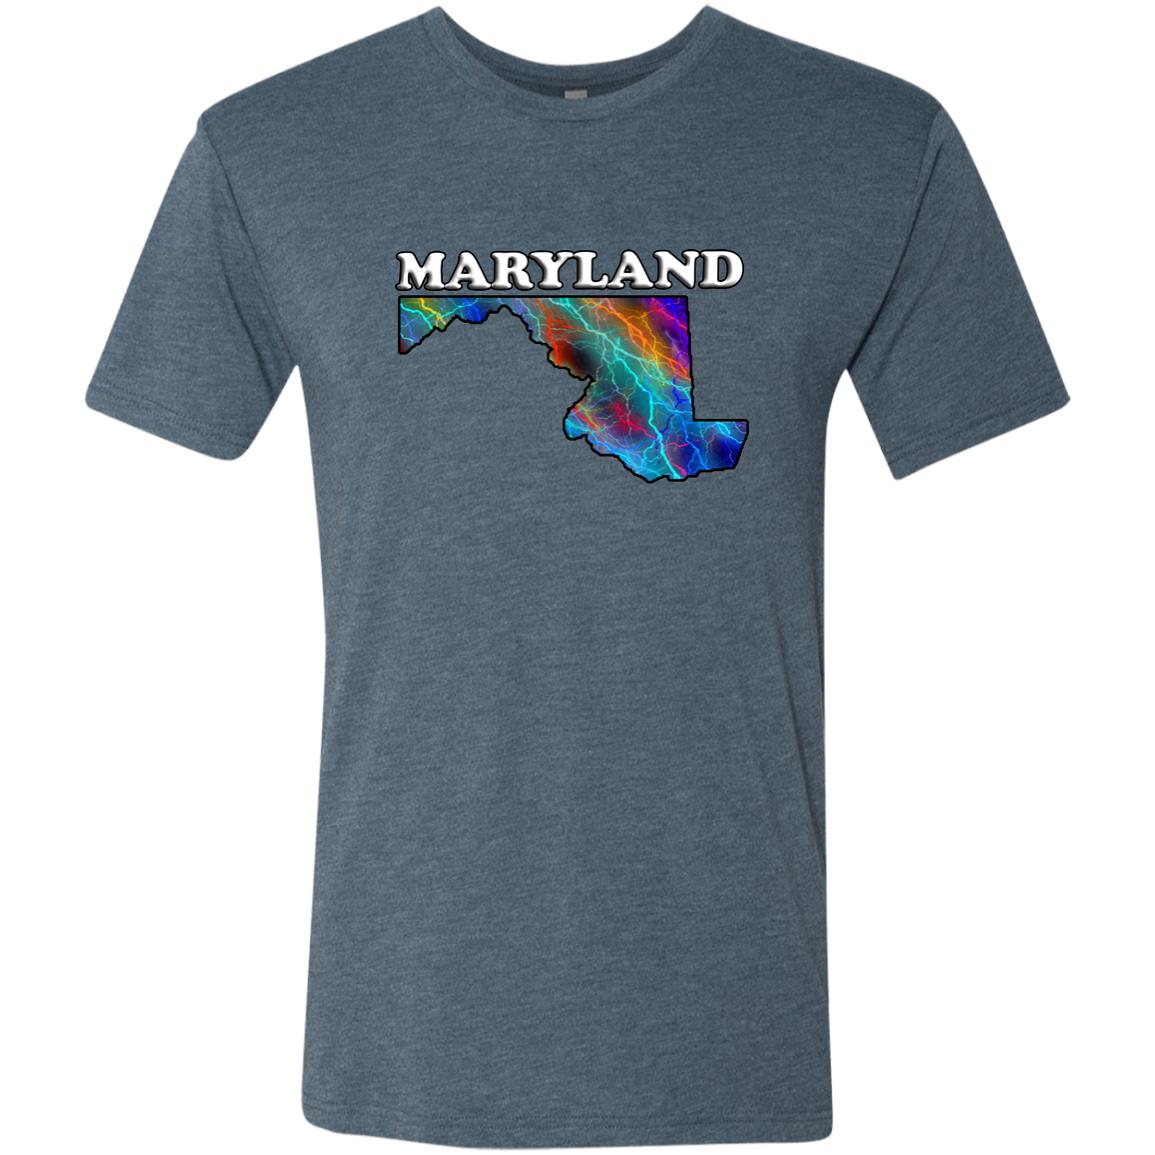 Maryland State T-Shirt